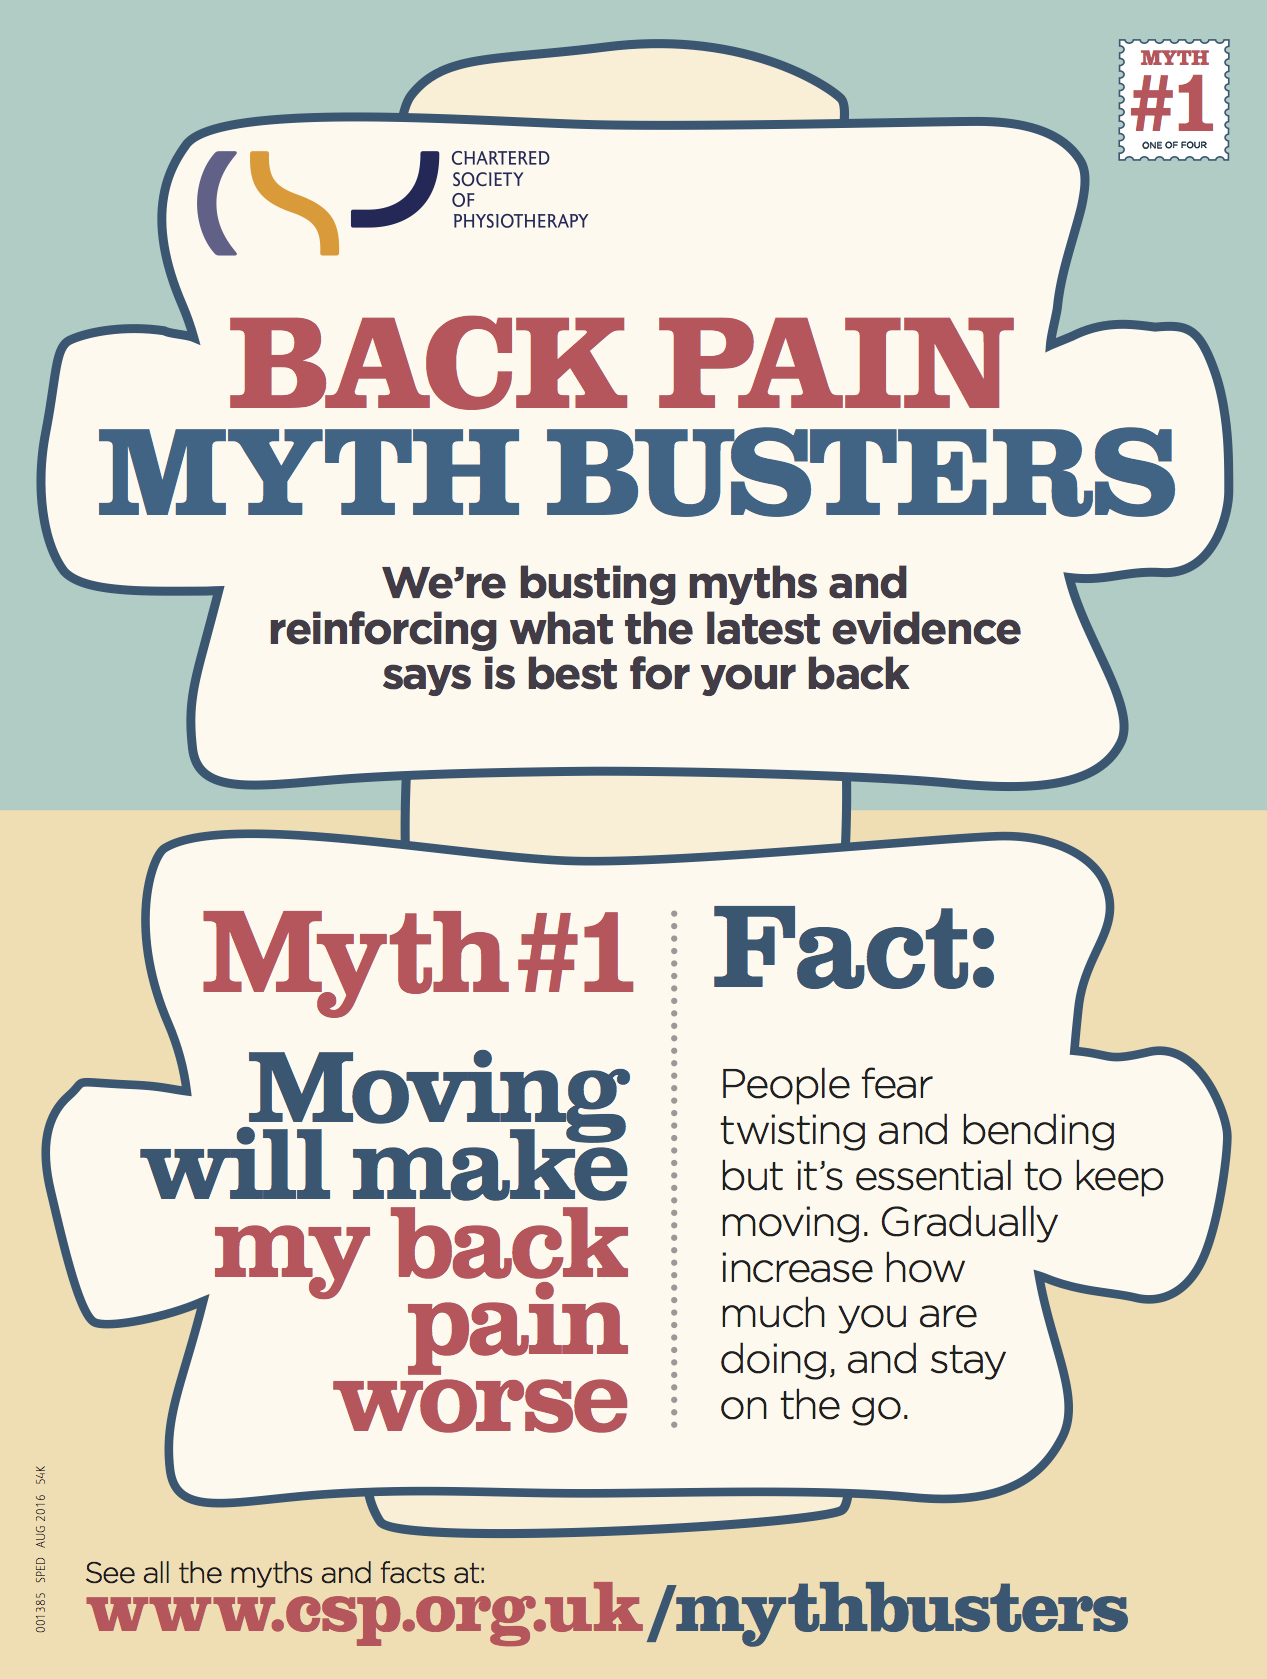 ernia-myth-busters-back-pain-1